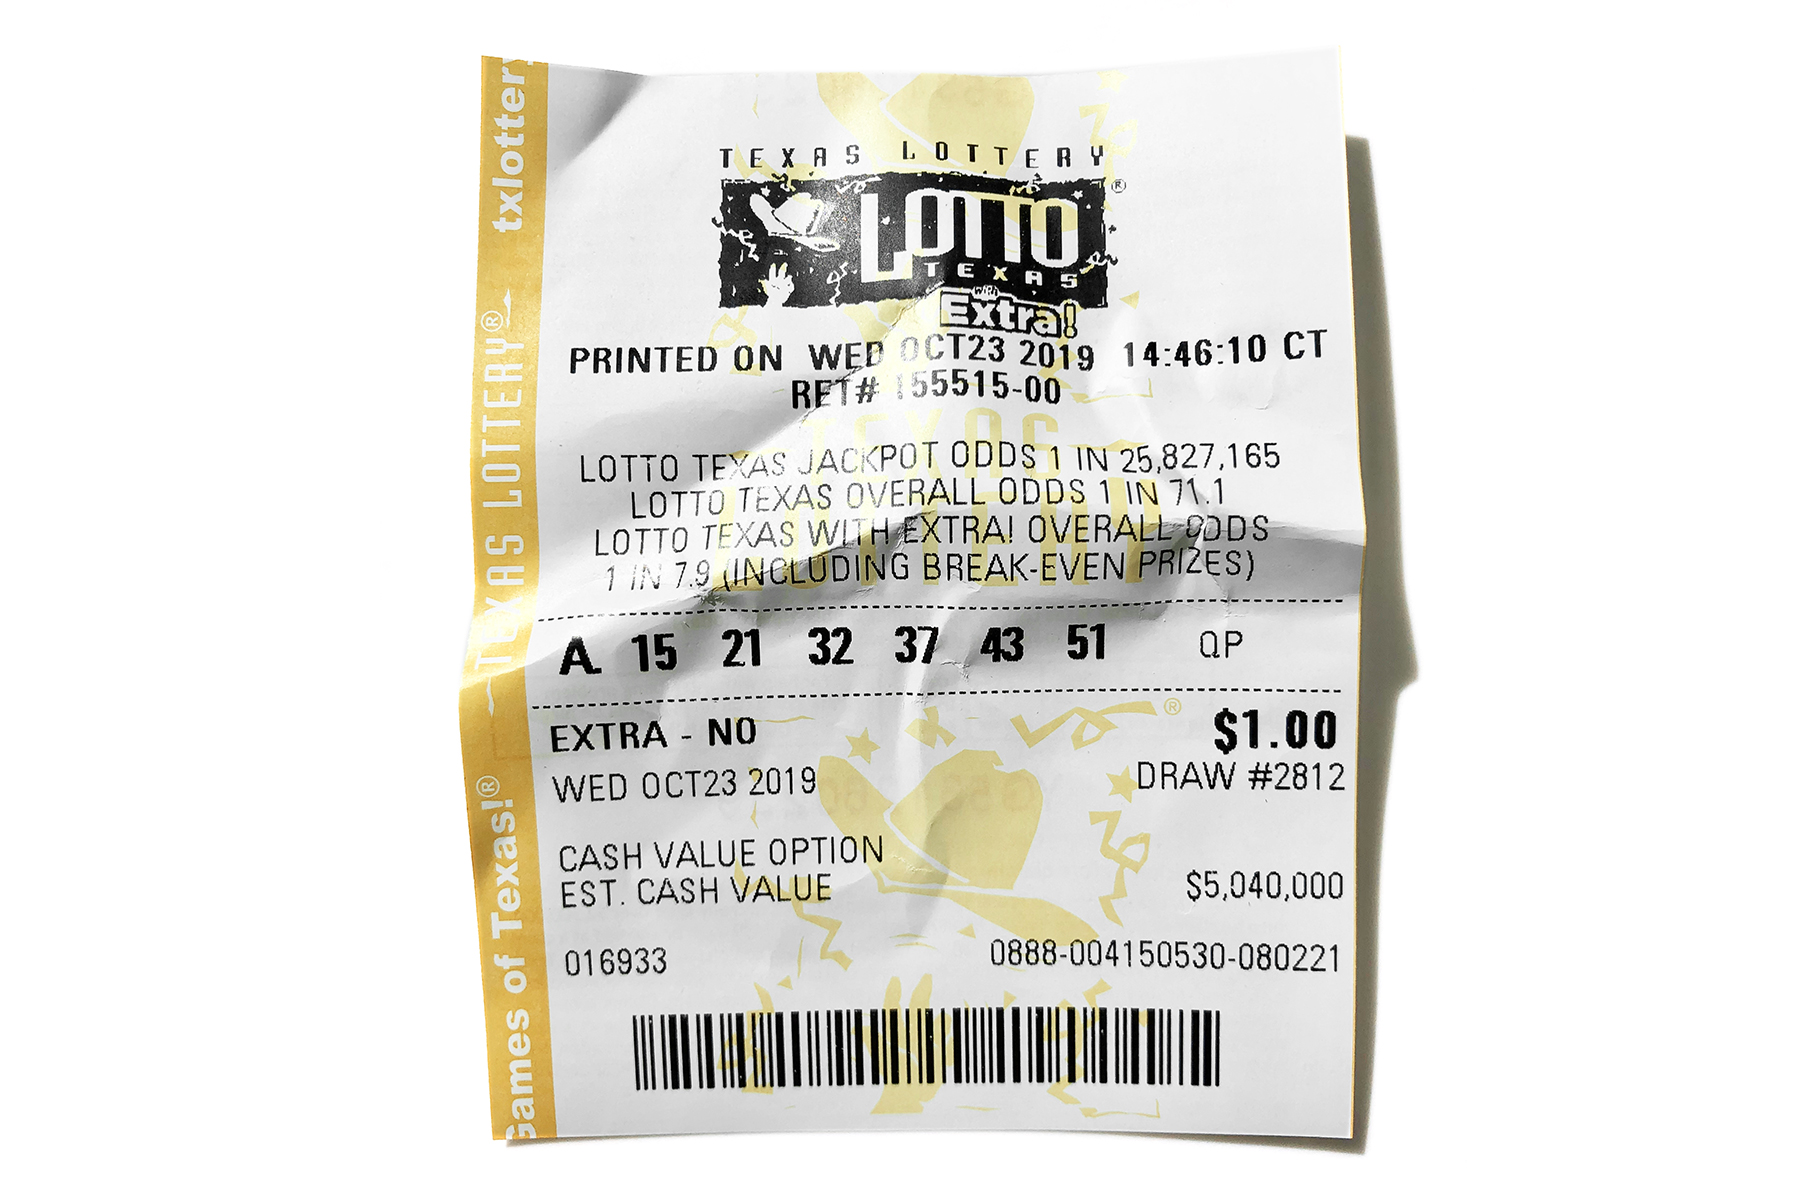 One Lotto Texas ticket